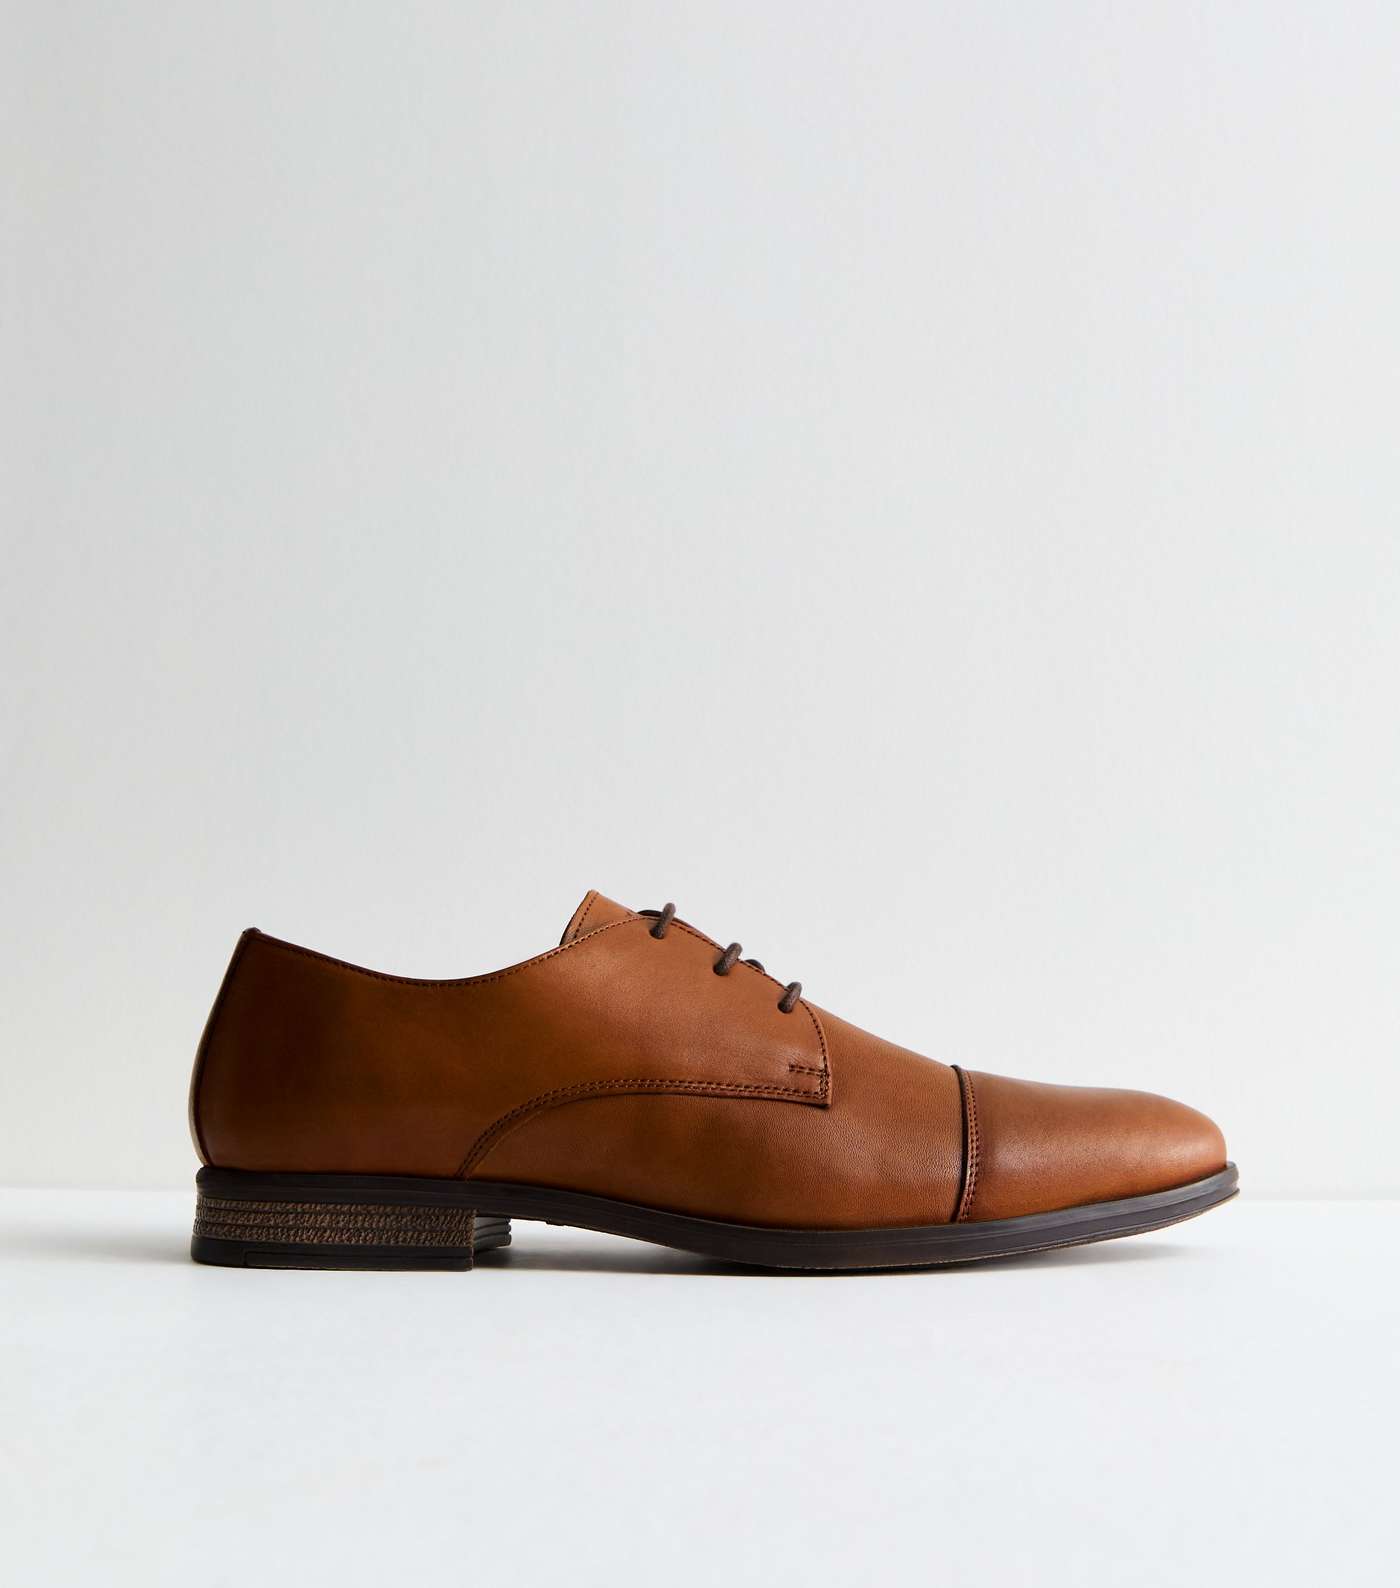 Jack & Jones Dark Brown Leather Oxford Shoes Image 4